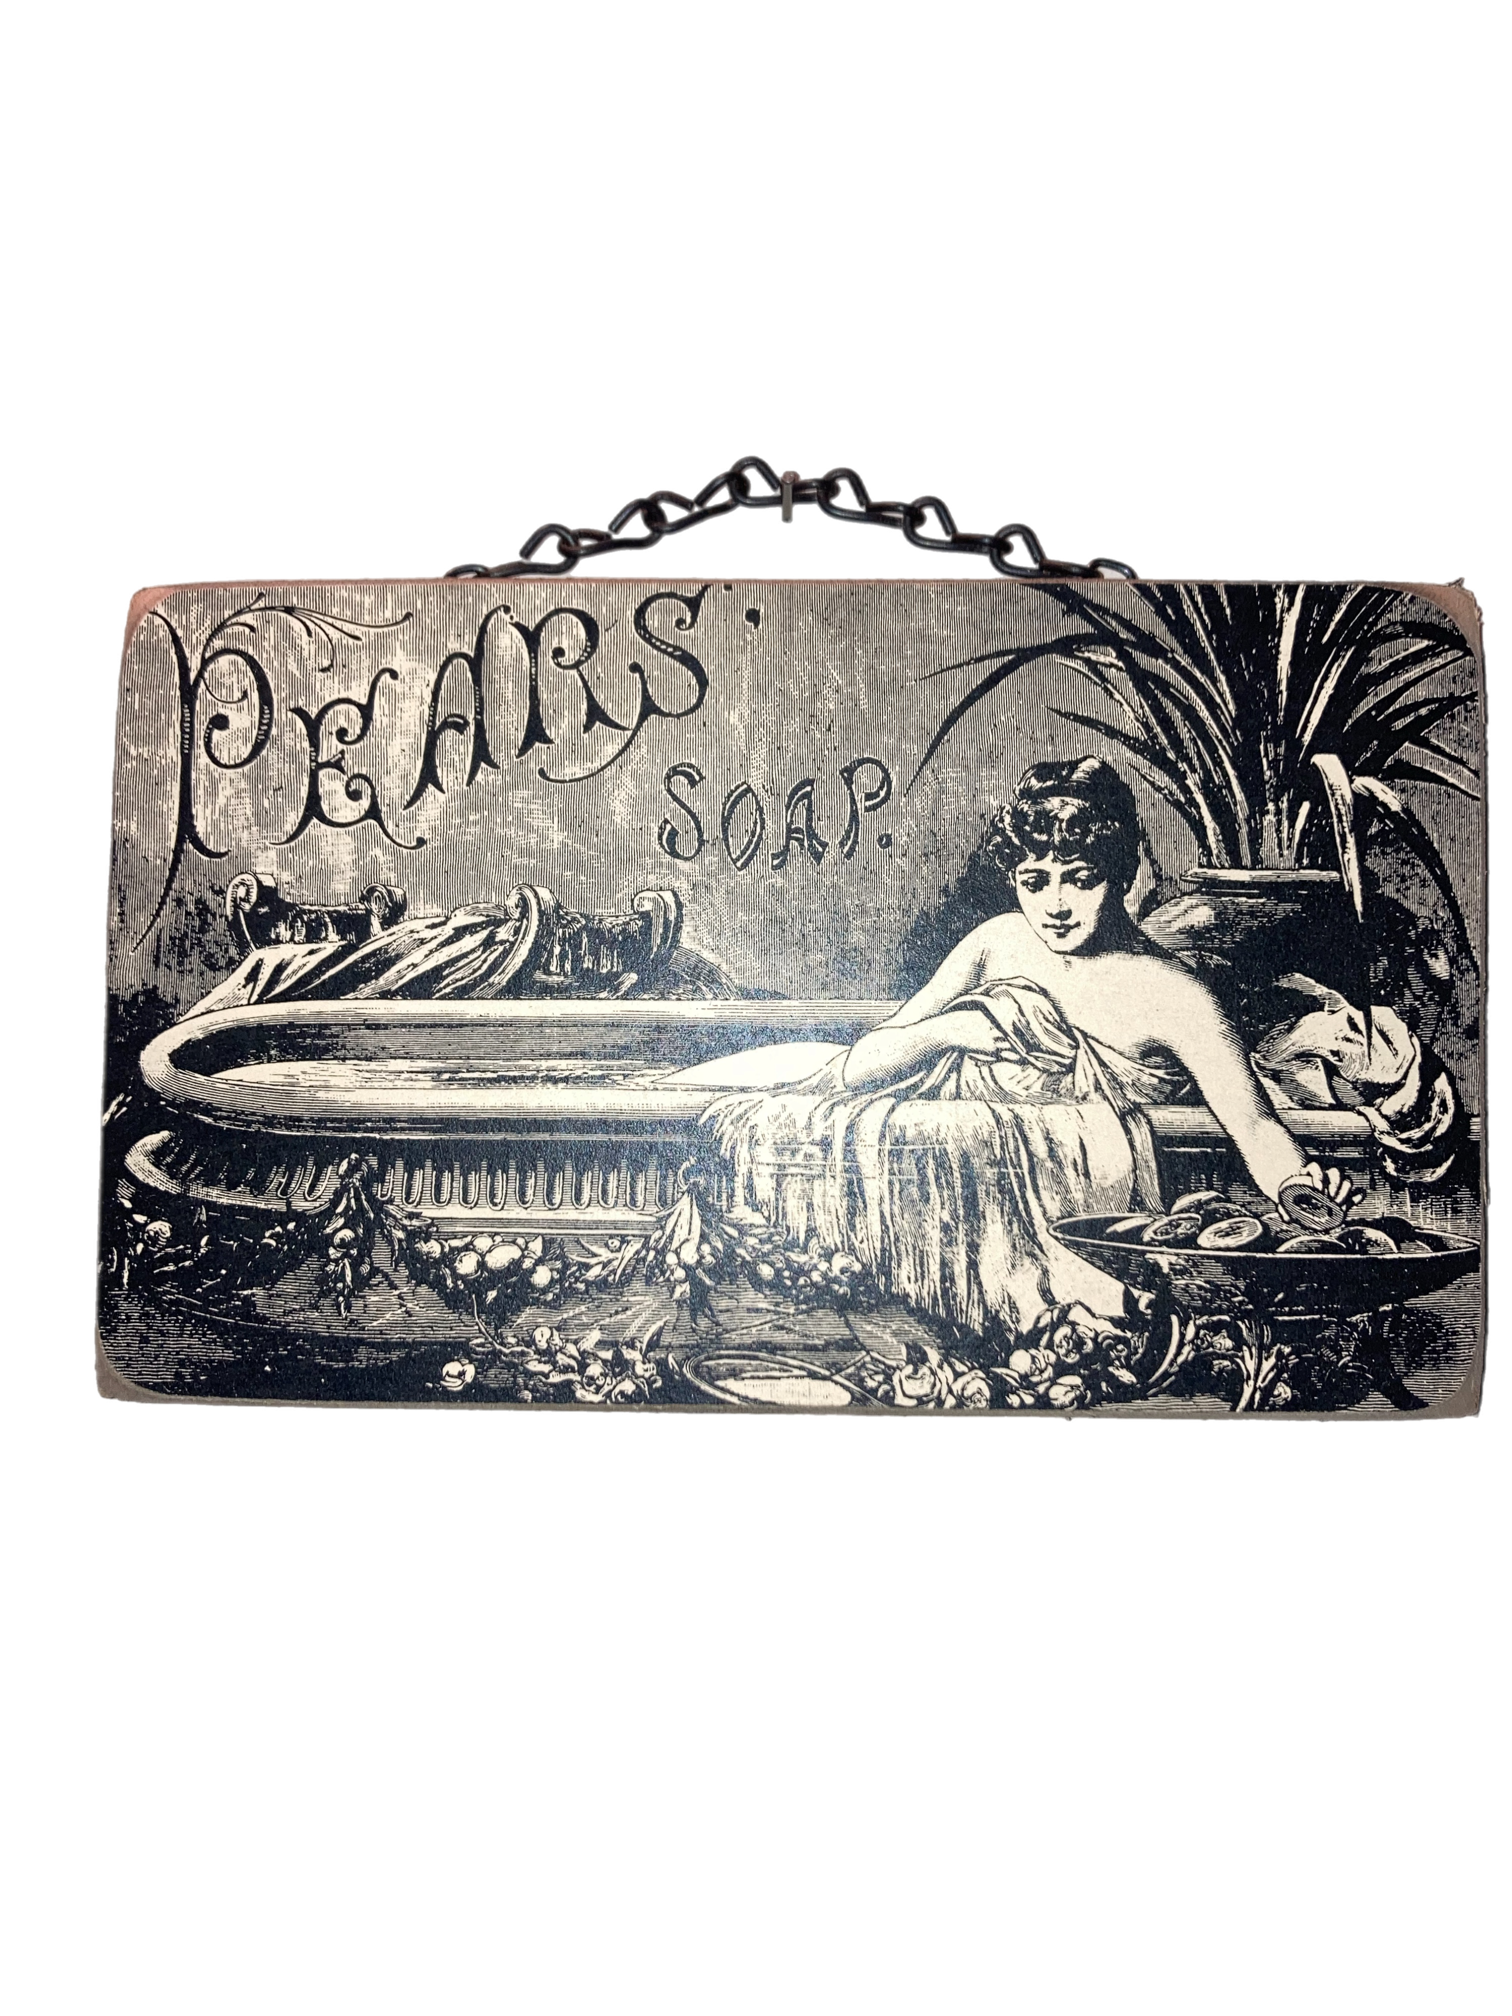 Pears' Soap Bathtub Sign